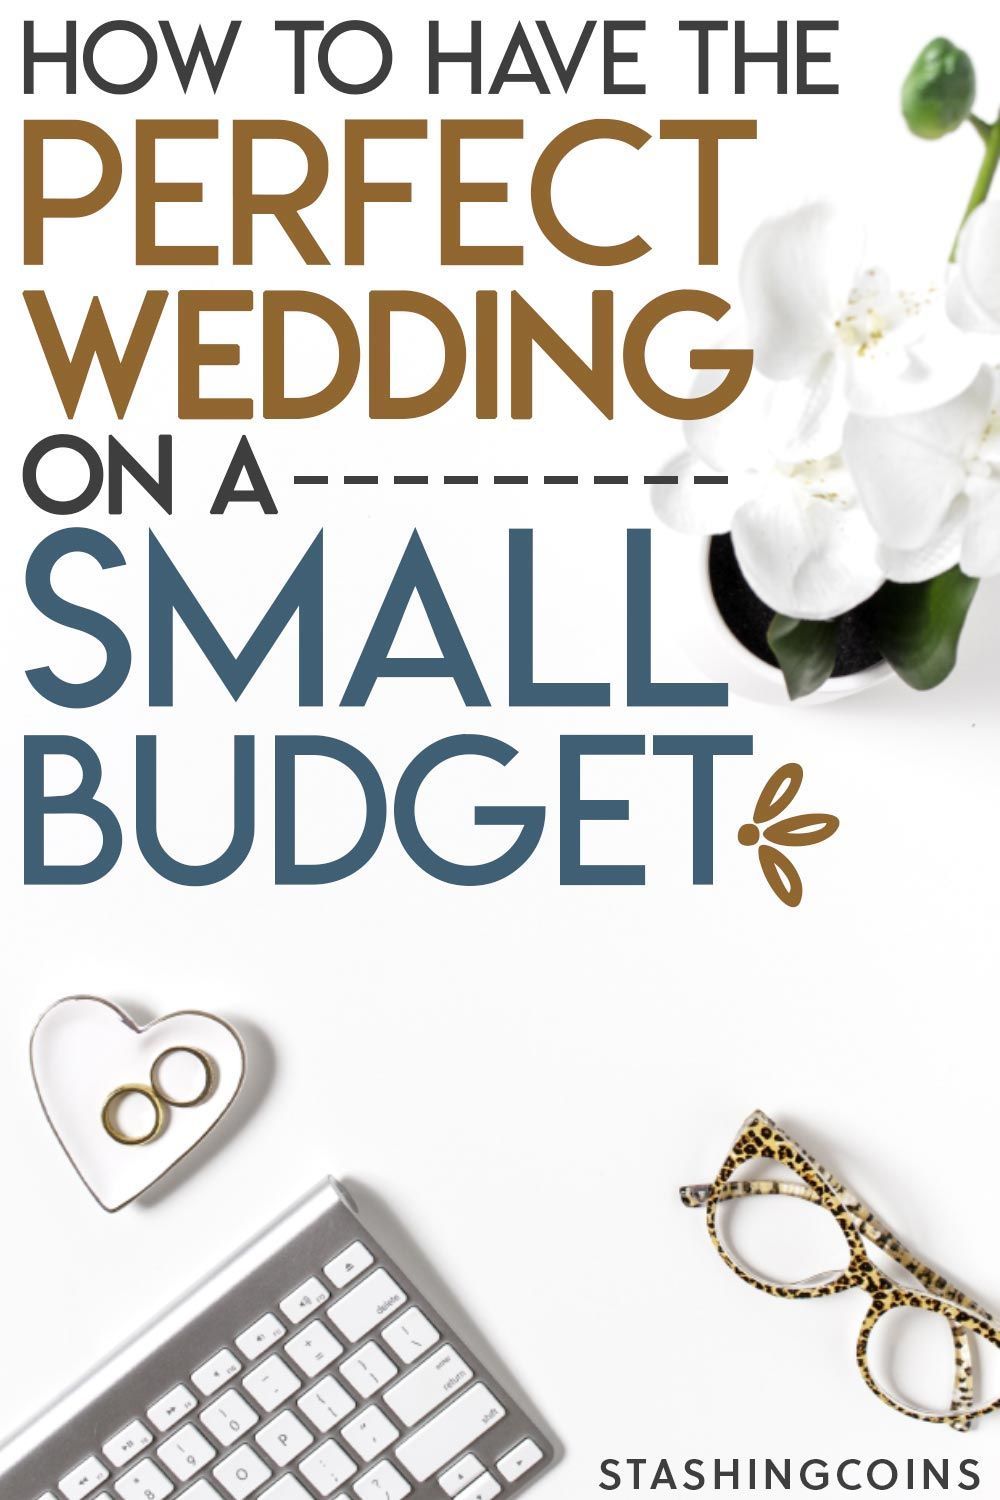 11 wedding Simple on a budget ideas